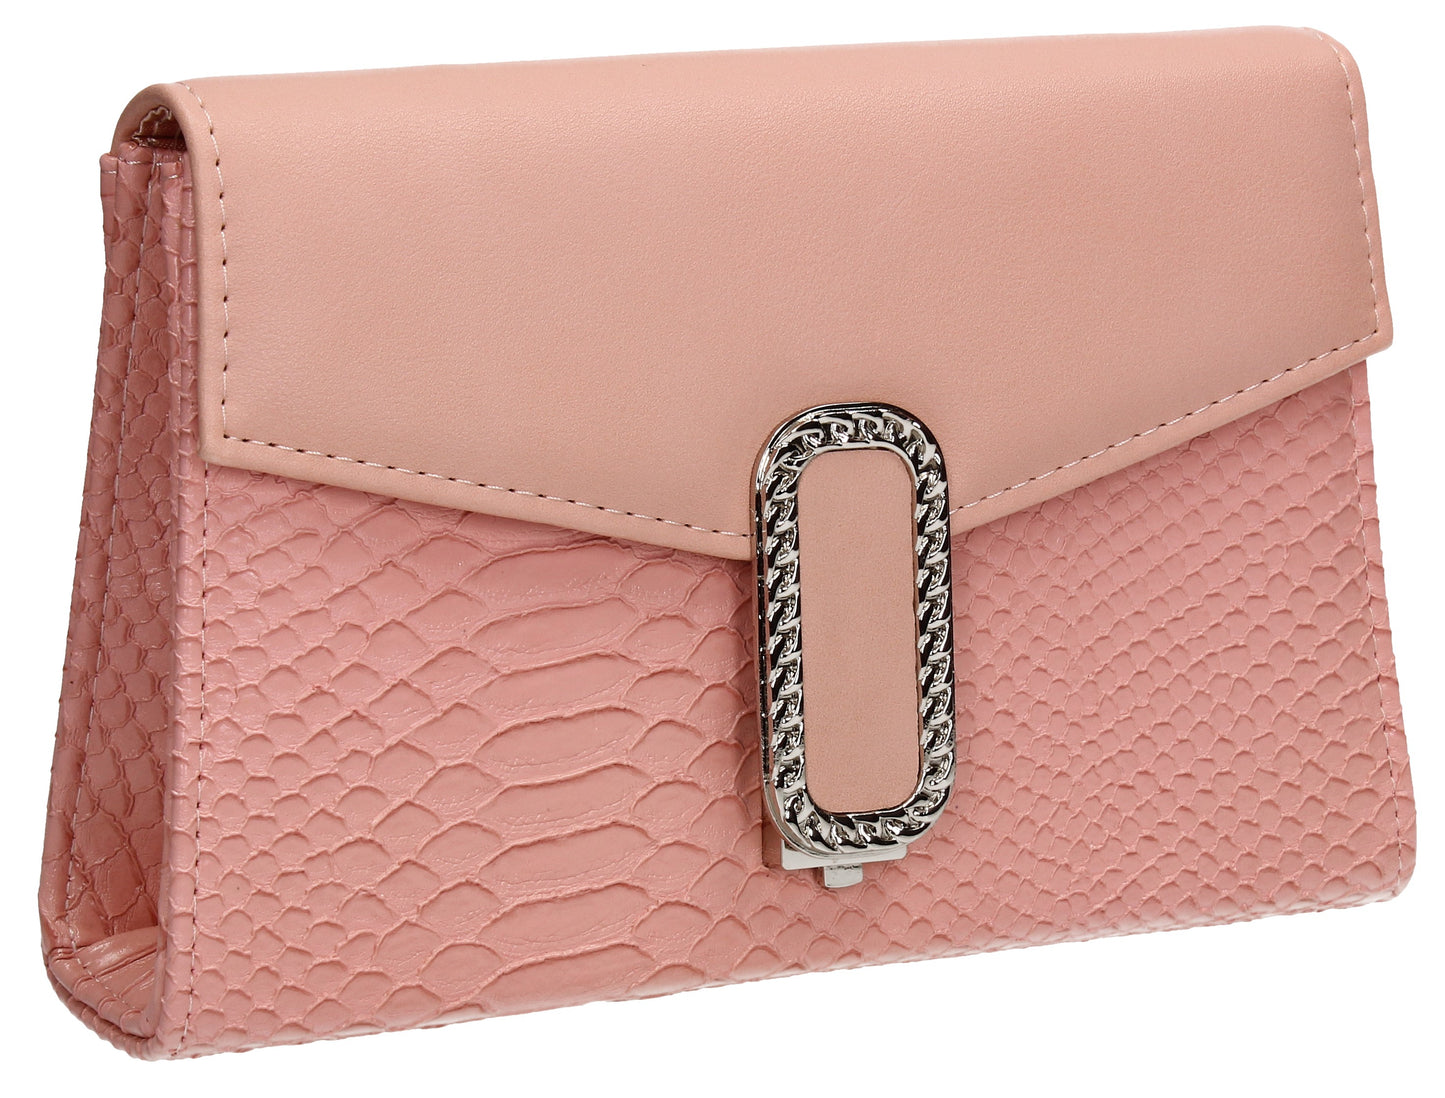 SWANKYSWANS Vanessa Clutch Bag Pink Cute Cheap Clutch Bag For Weddings School and Work